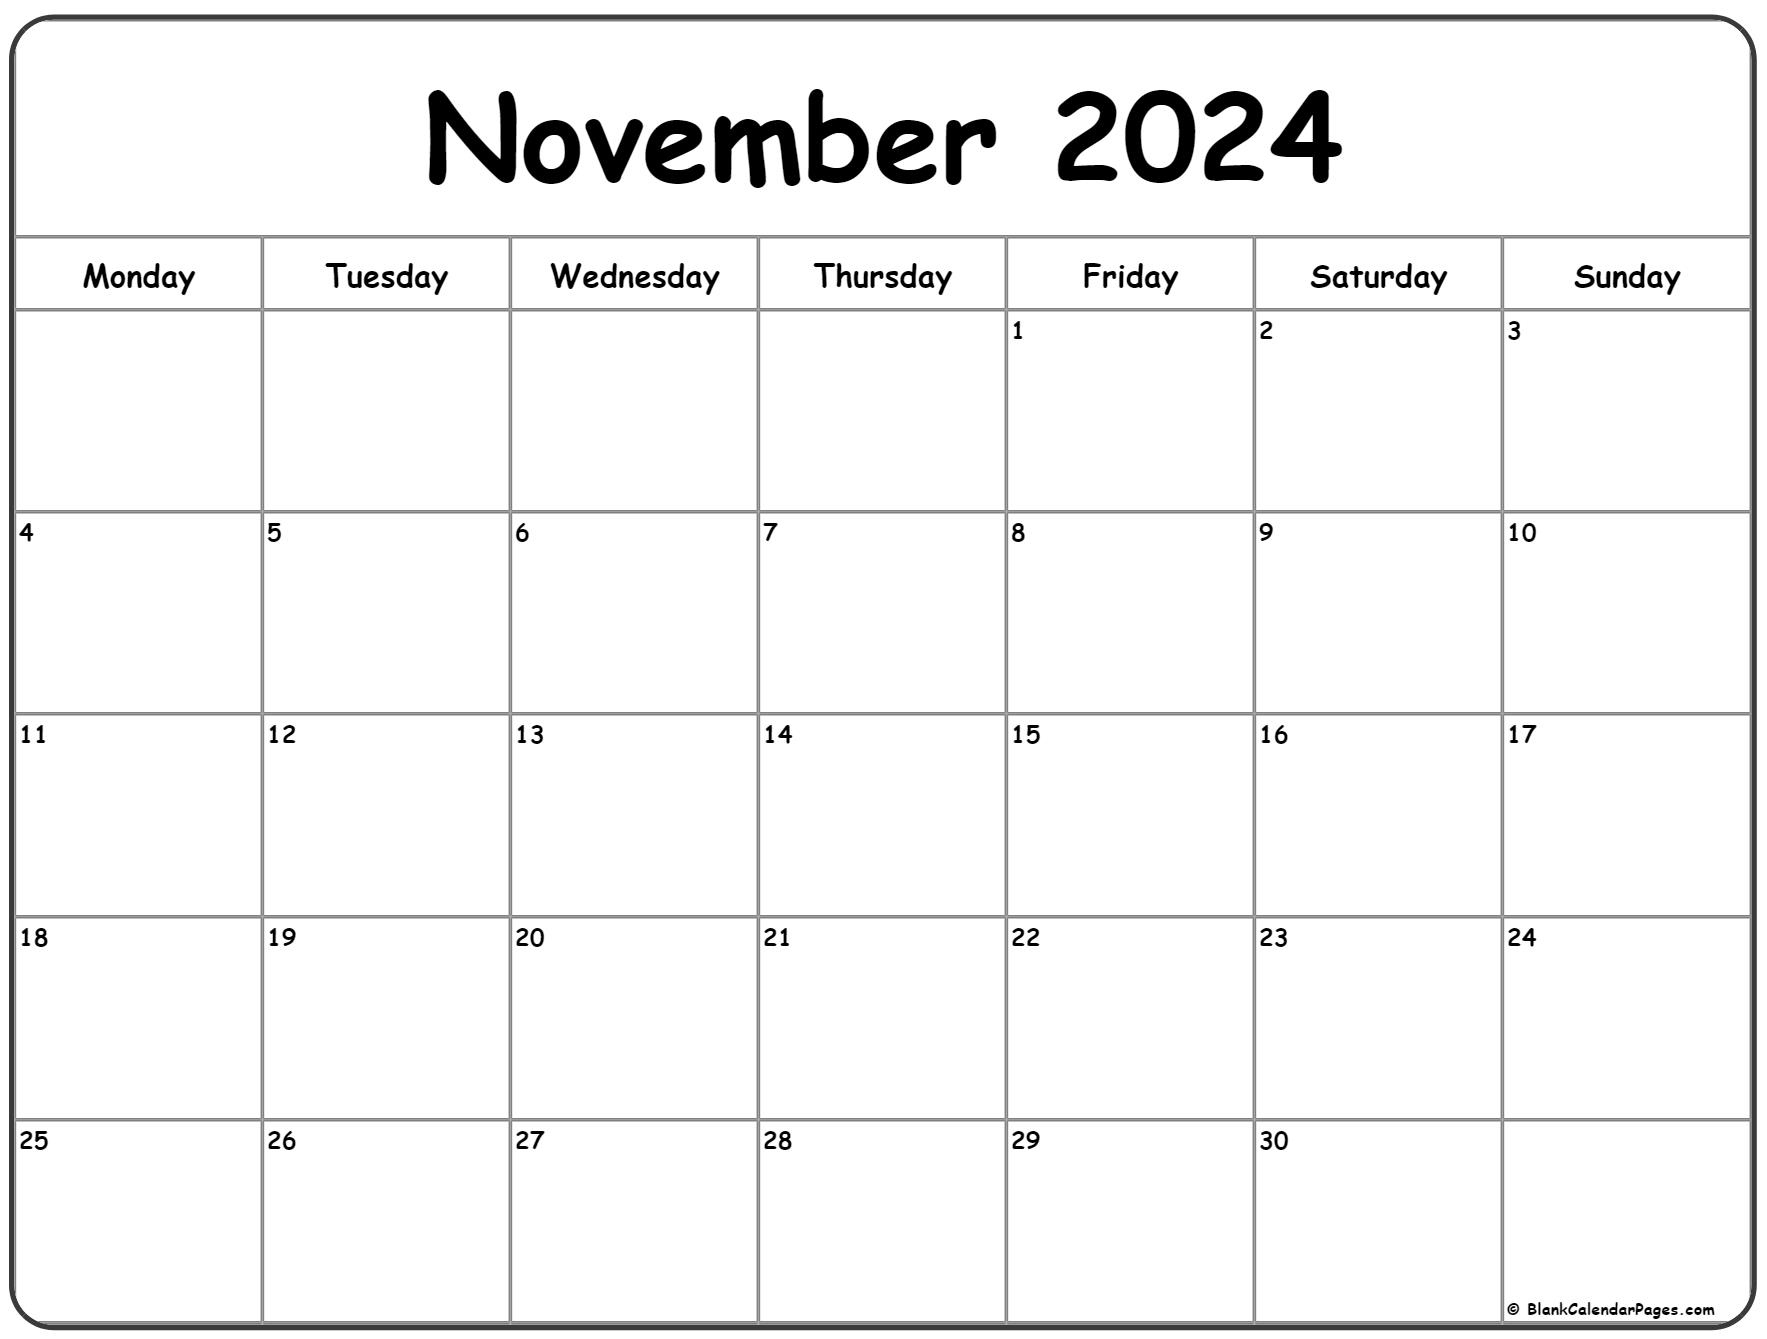 November 2024 Monday Calendar | Monday To Sunday regarding Free Printable Appointment Calendar November 2024